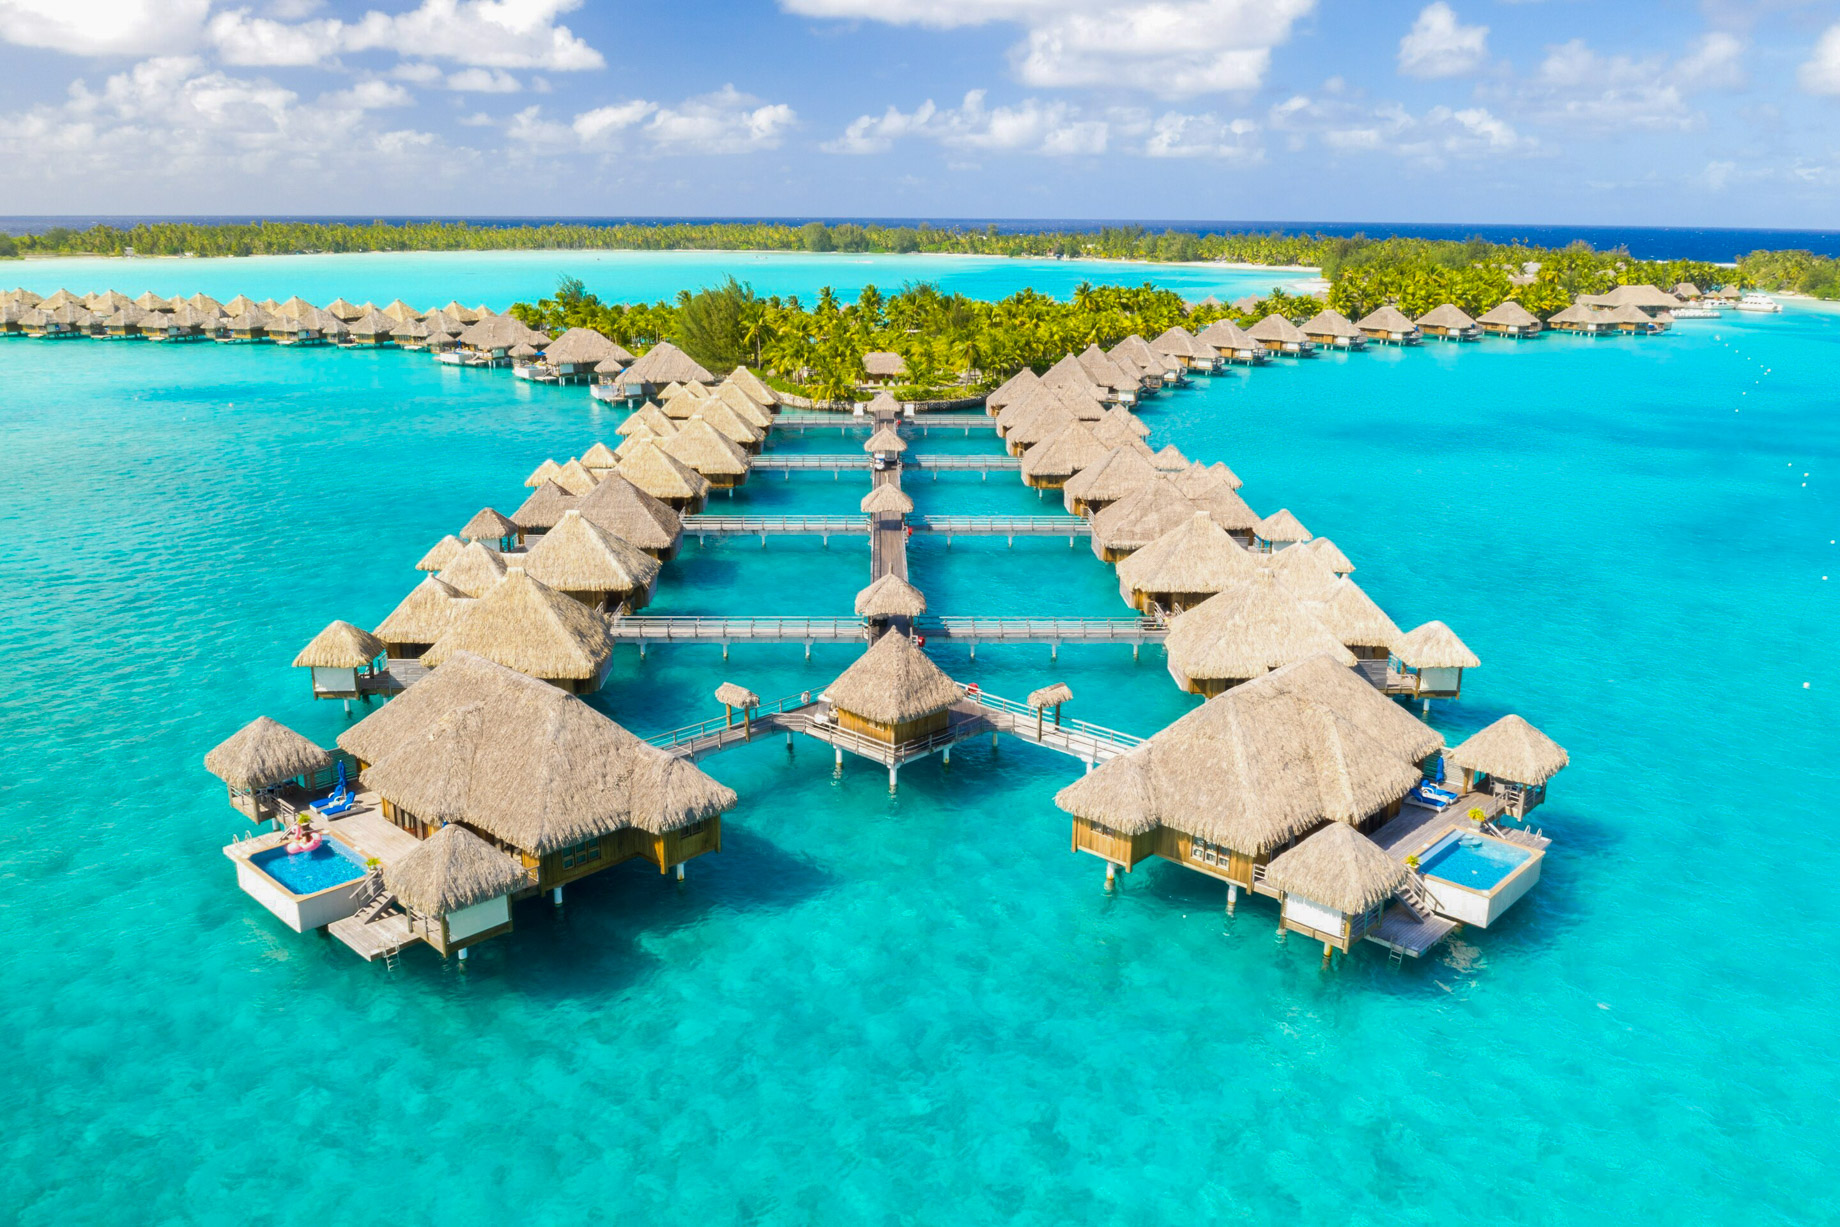 The St. Regis Bora Bora Resort - Bora Bora, French Polynesia - Two Bedrooms Overwater Royal Suite Villas